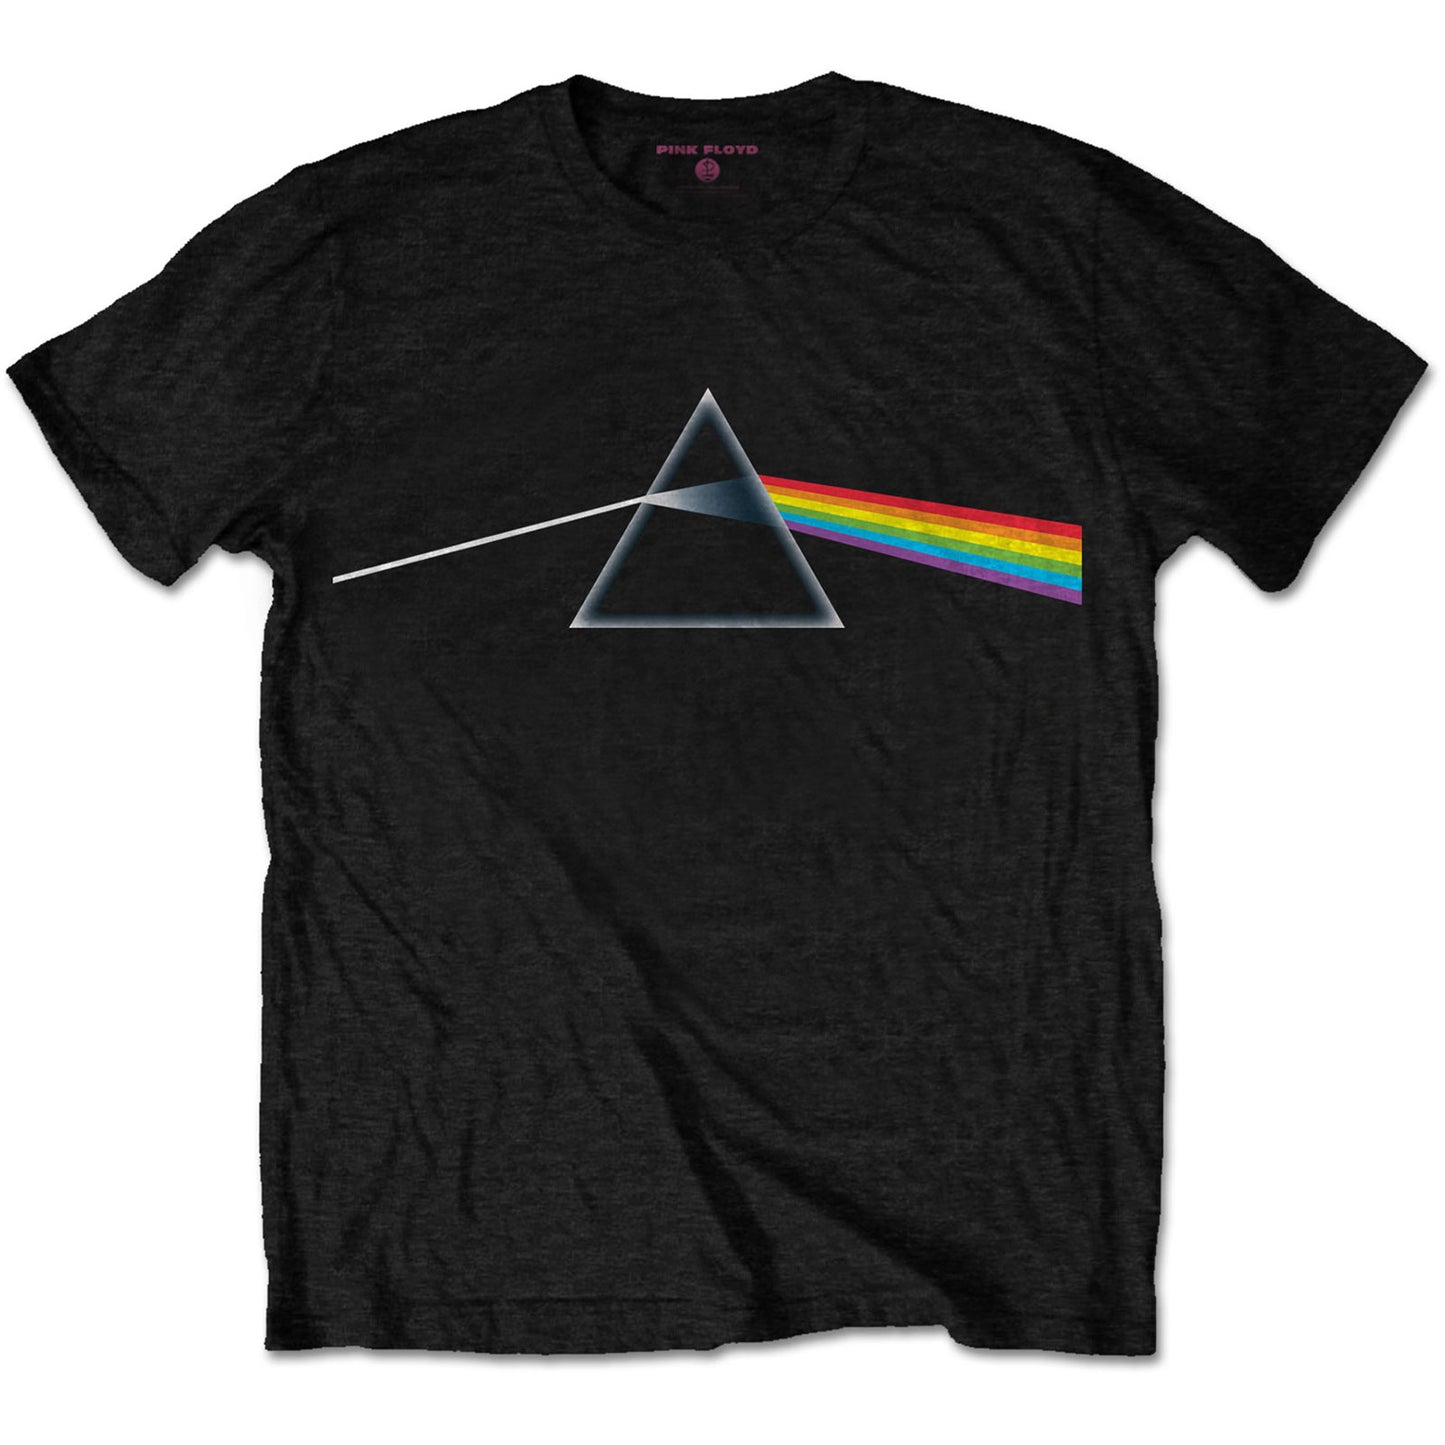 Pink Floyd T-Shirt: Dark Side of the Moon Album